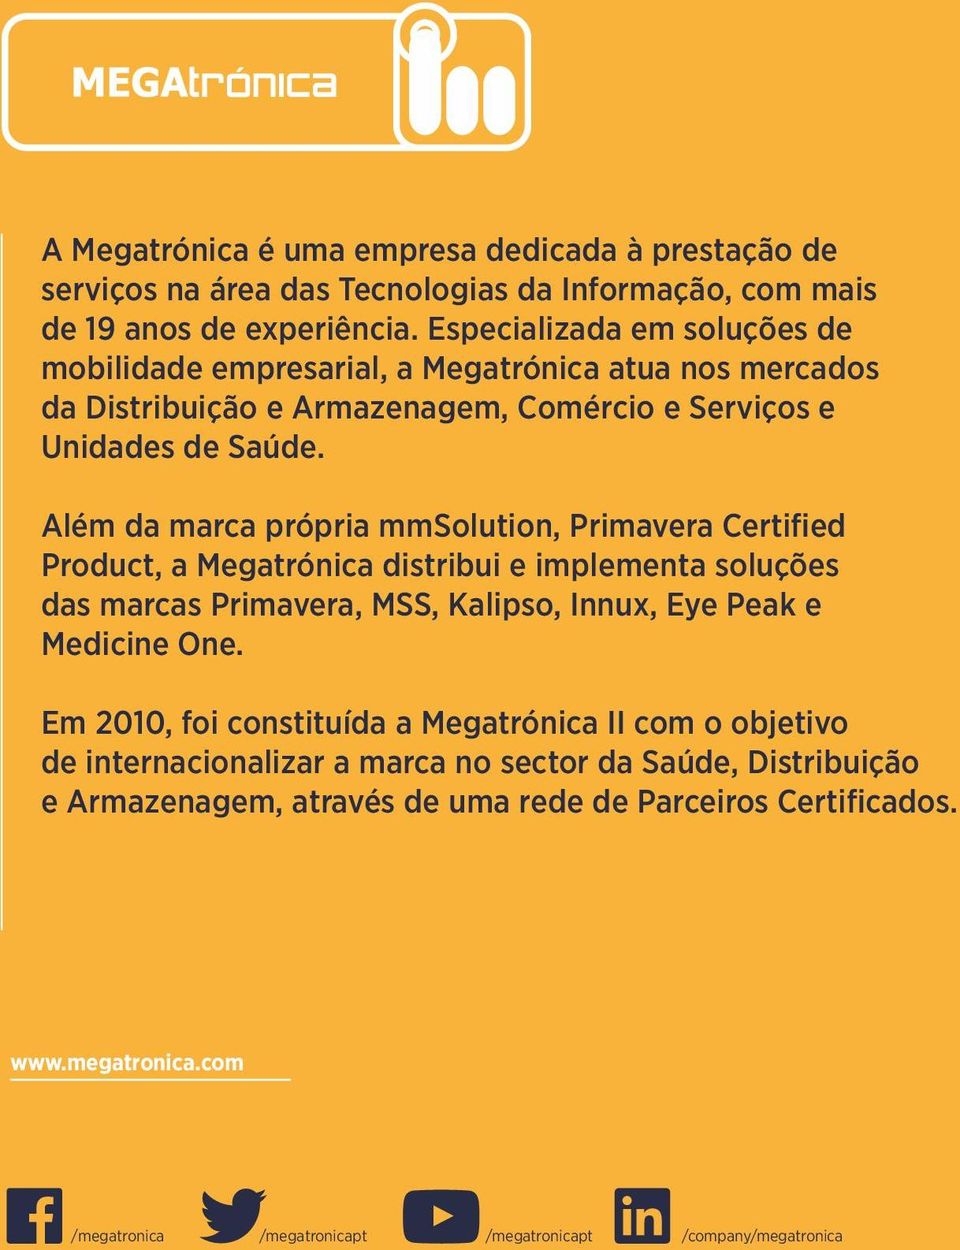 Além da marca própria mmsolution, Primavera Certified Product, a Megatrónica distribui e implementa soluções das marcas Primavera, MSS, Kalipso, Innux, Eye Peak e Medicine One.